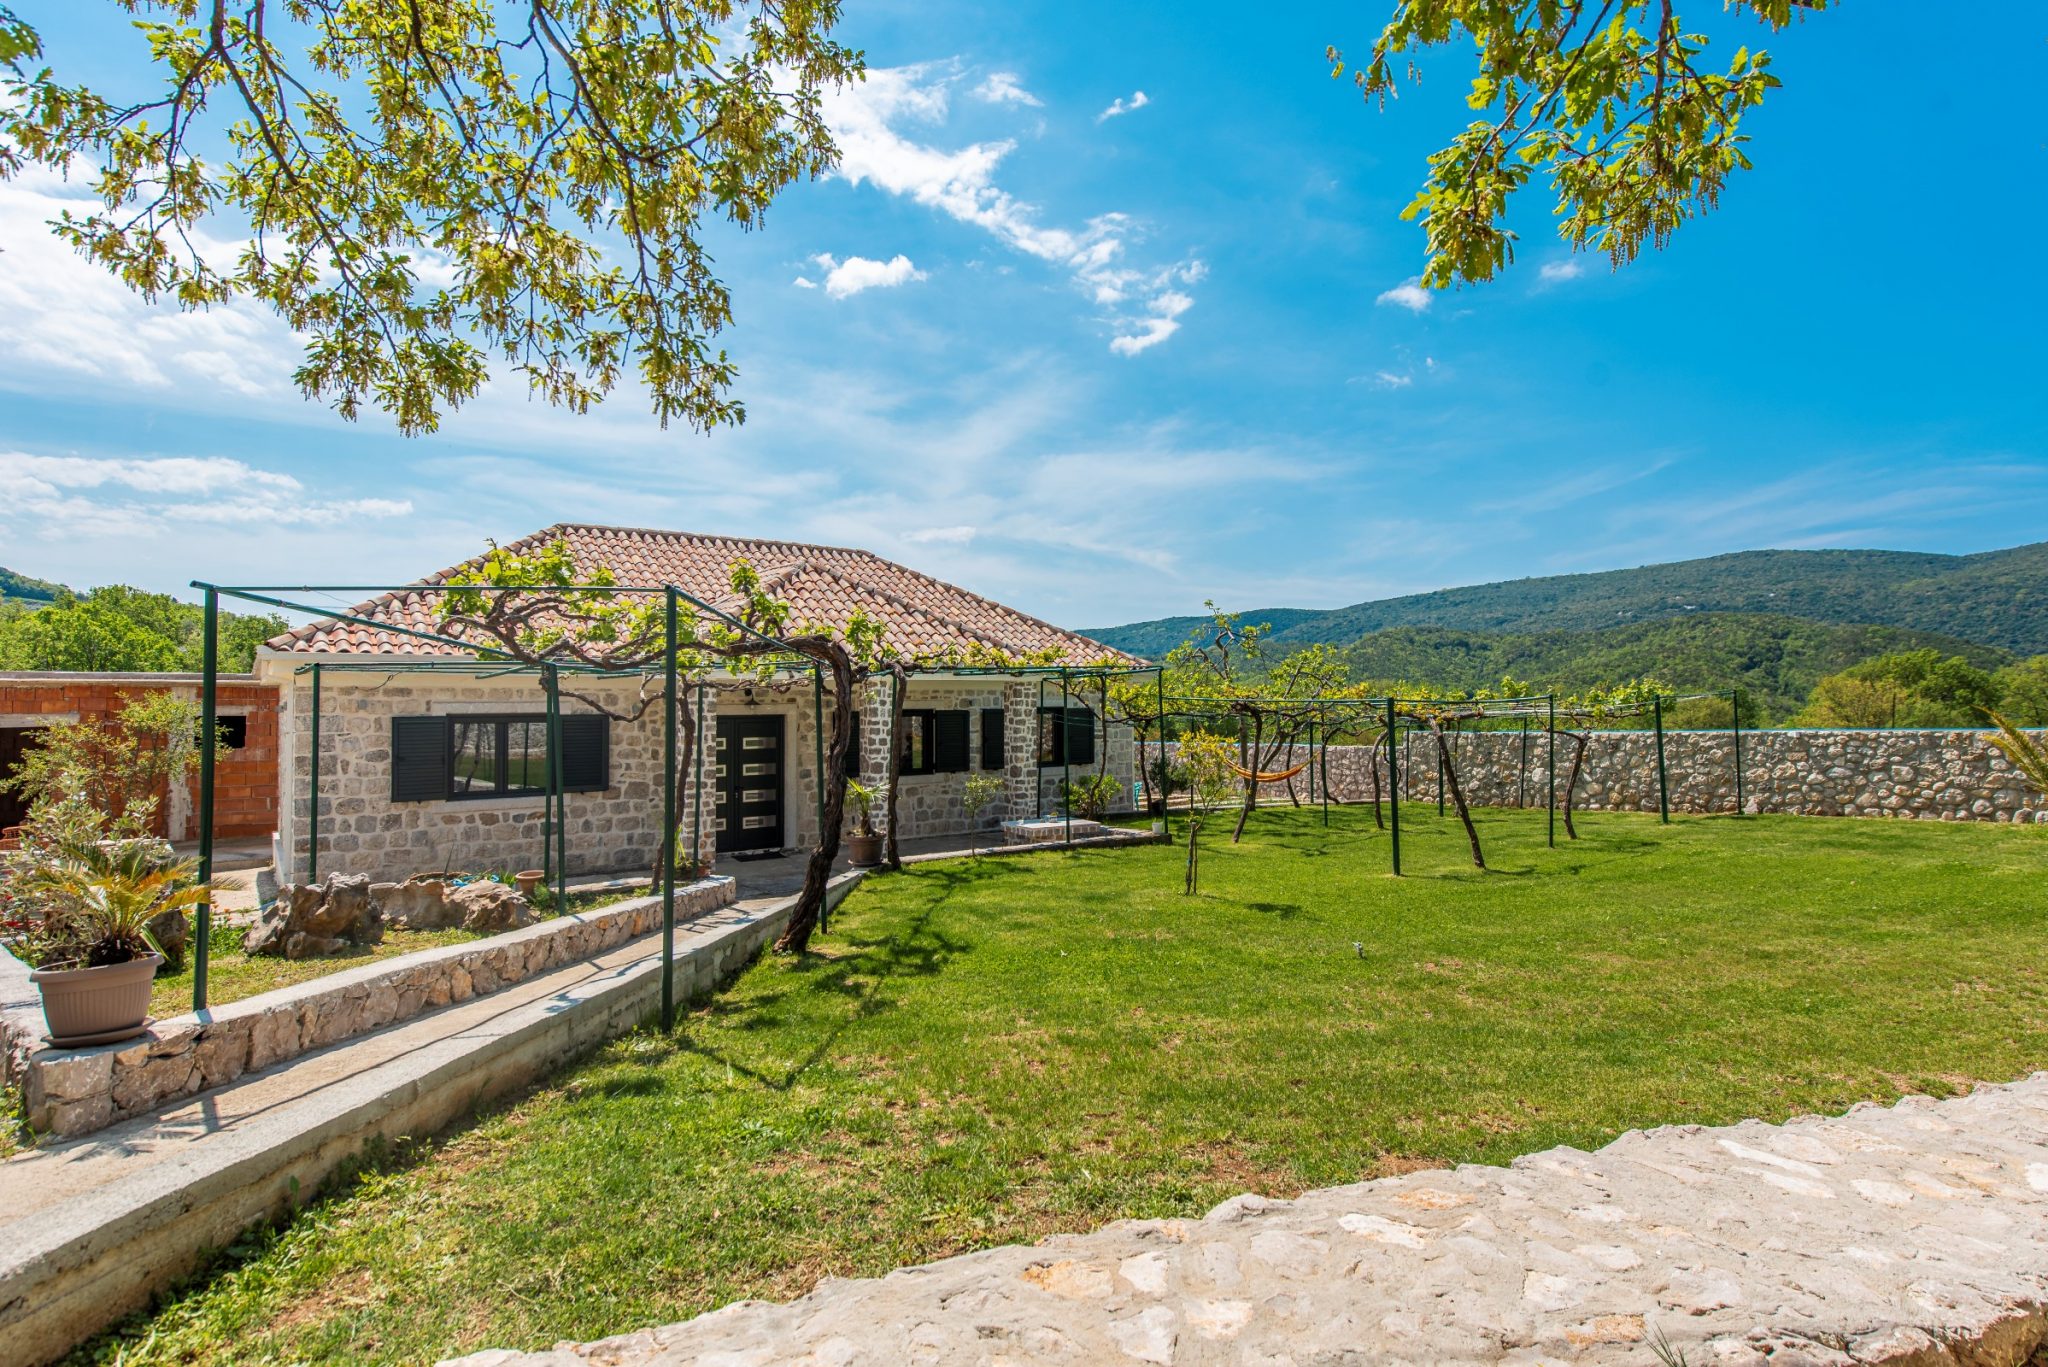 Kotor, Radanovići - new stone house on a large fenced plot